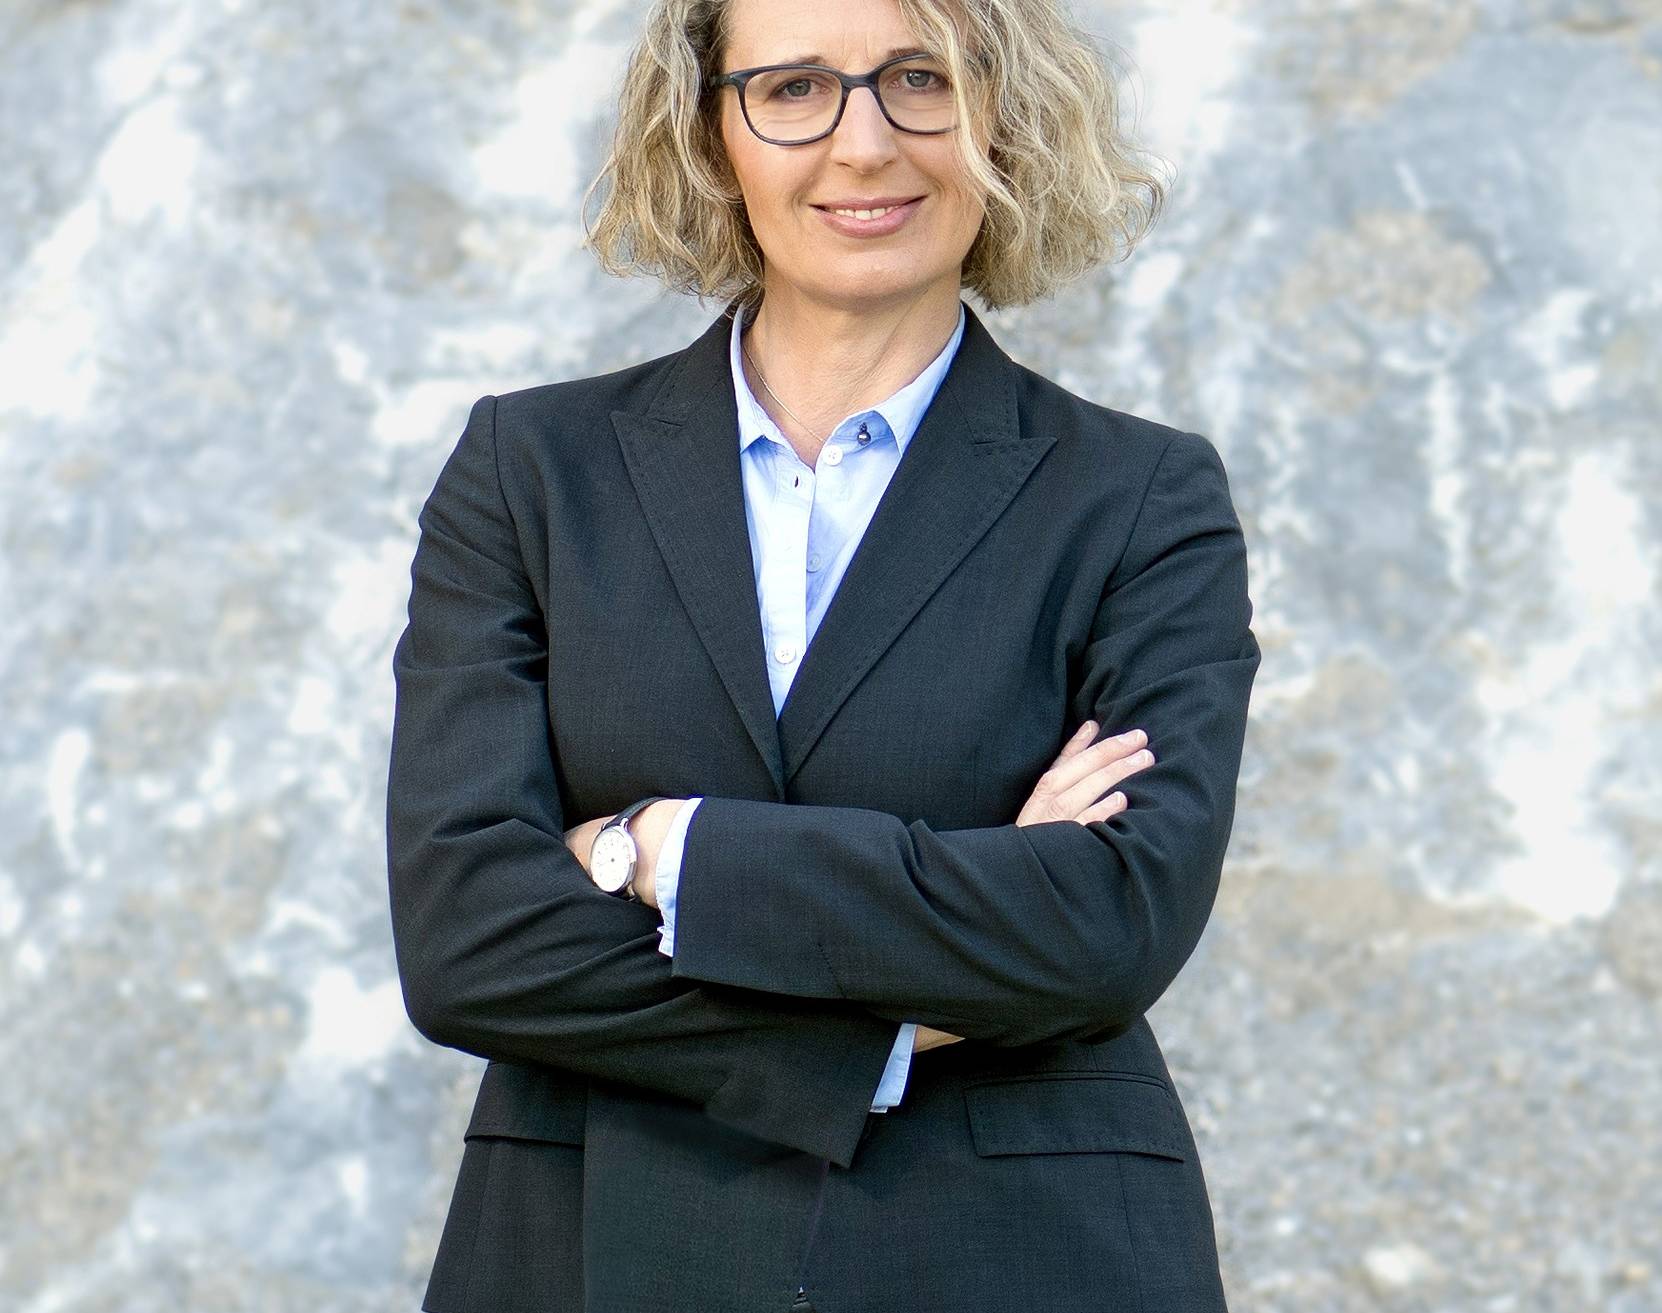  Bürgermeisterin Sandra Pietschmann übernimmt die Leitung des Dezernats 1. 
  